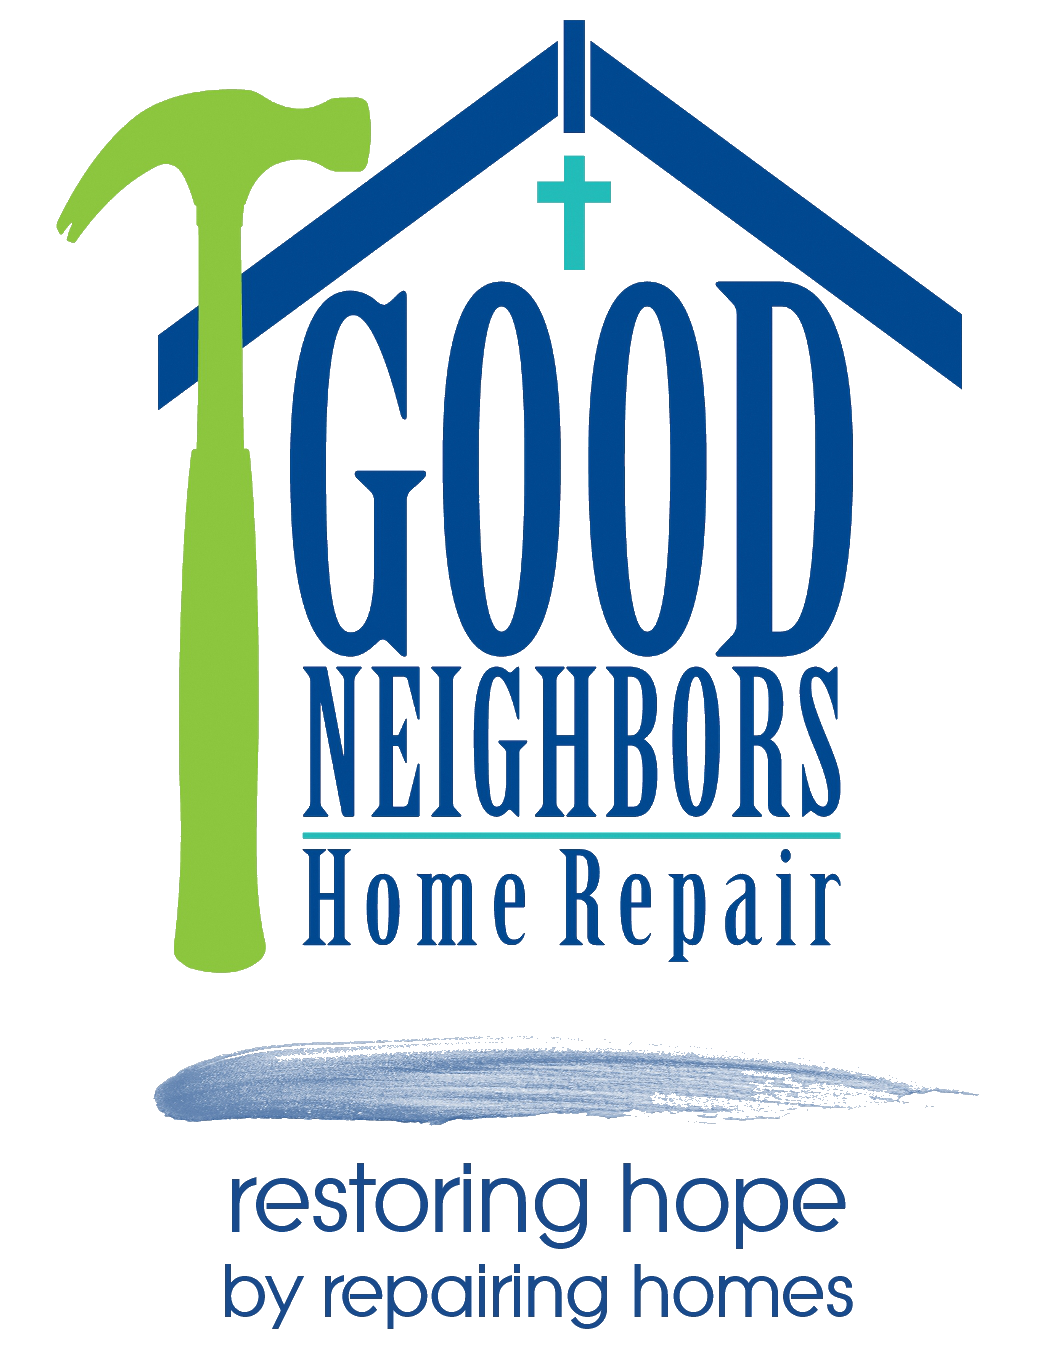 Good Neighbors Home Repair